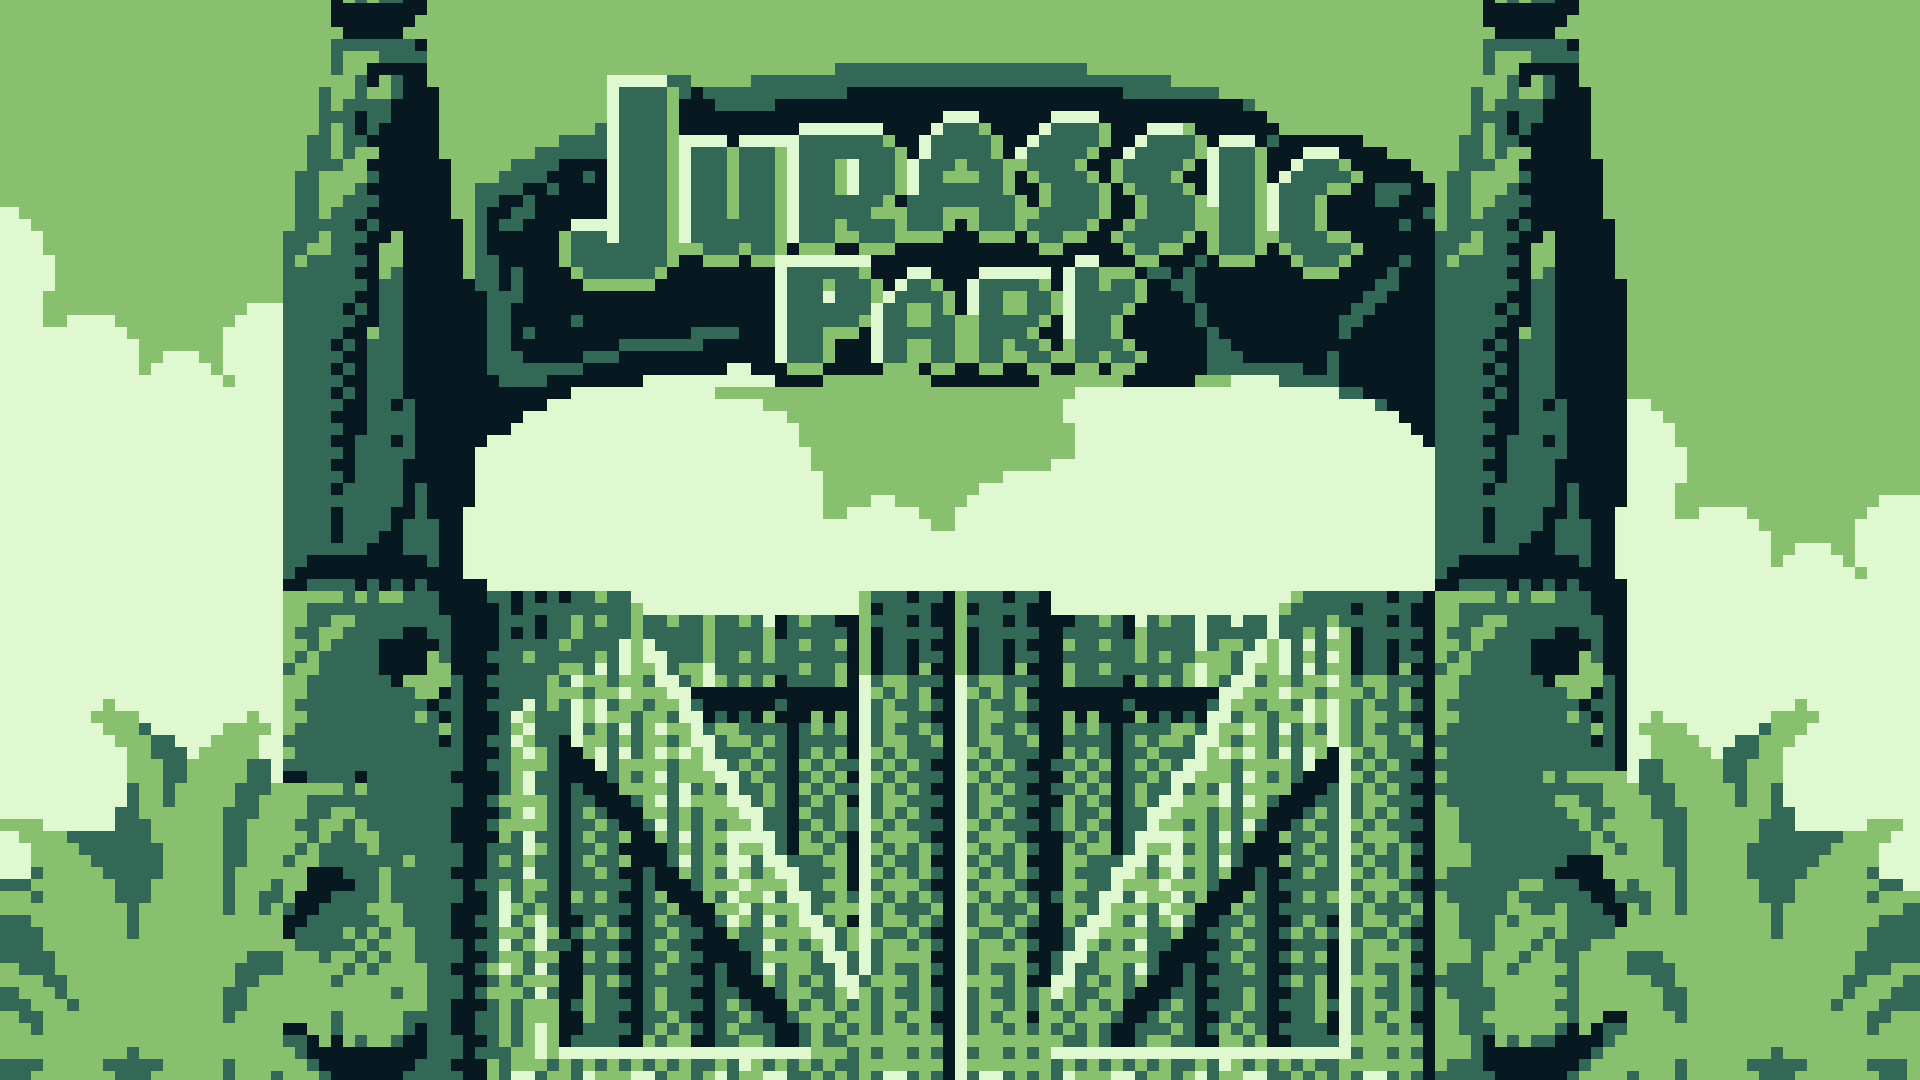 Jurassic Park Pt 2 Portable: Beat The Game